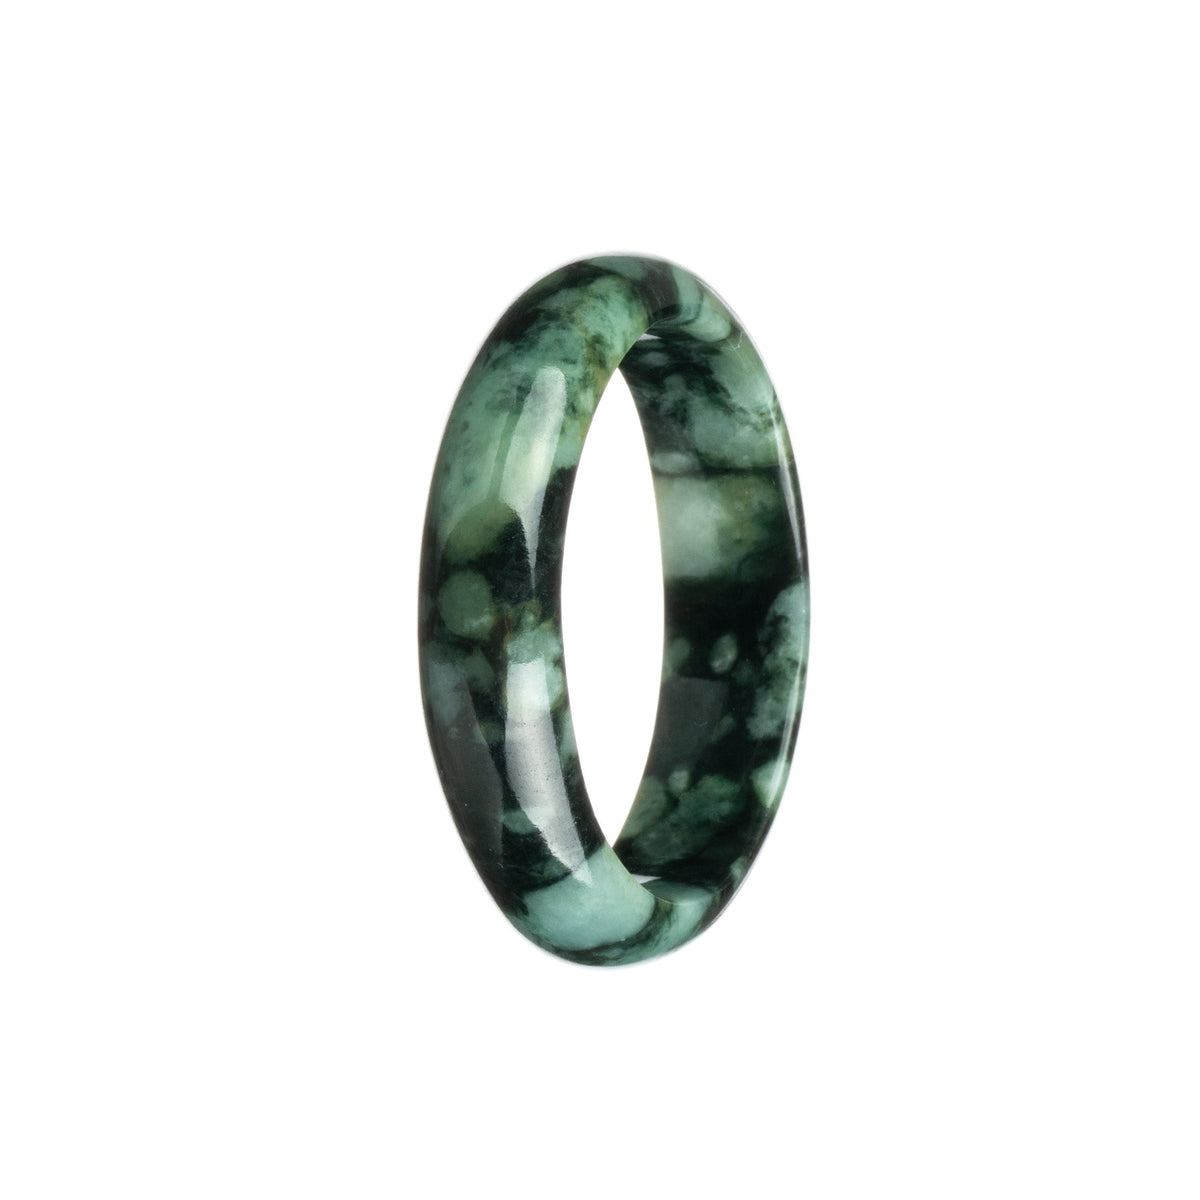 Genuine Grade A Green and Black Pattern Burma Jade Bracelet - 53mm Half Moon